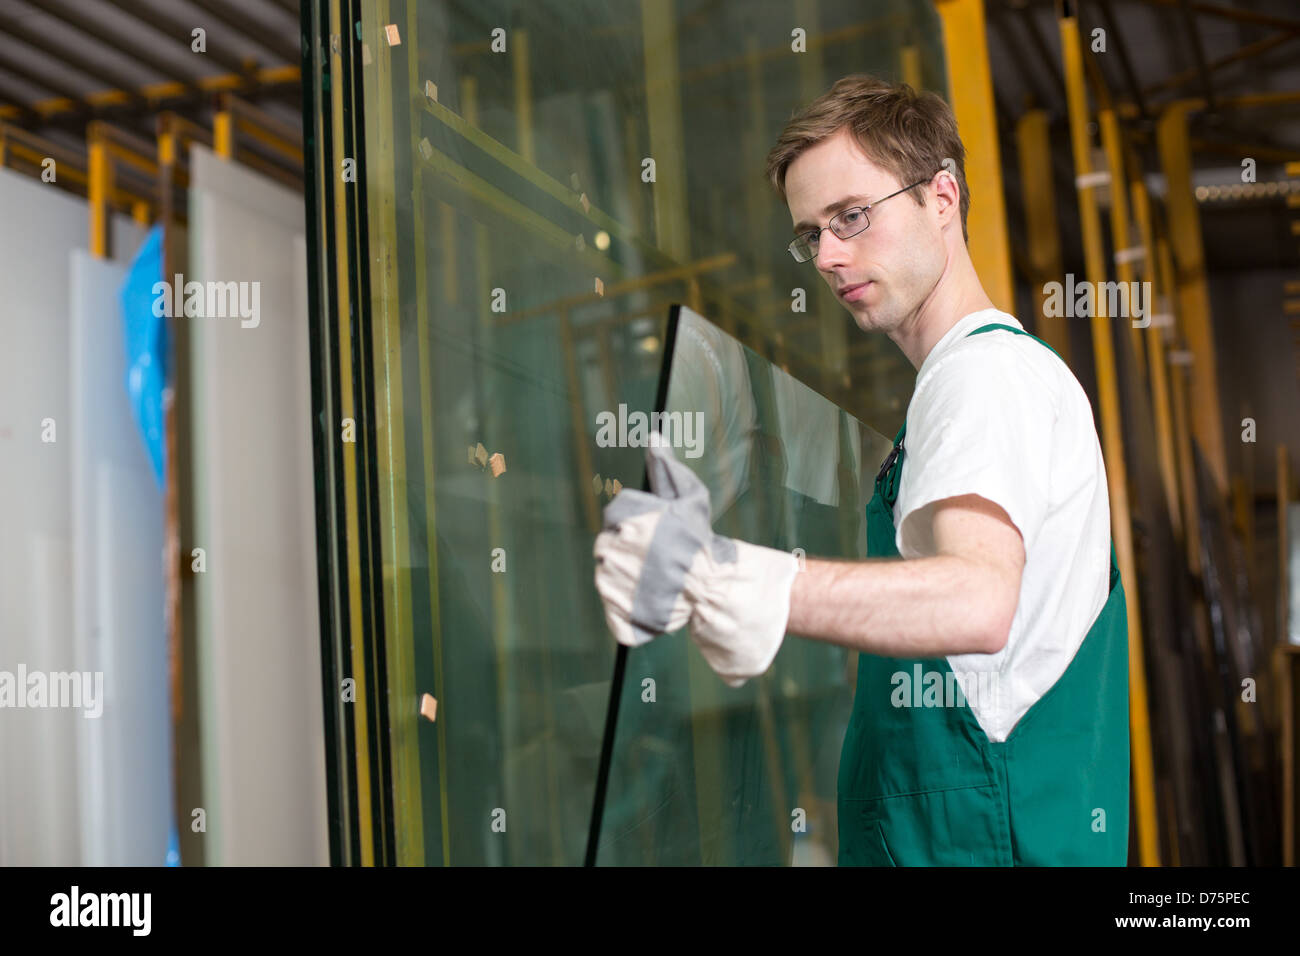 Worker in glazier's workshop, warehouse or storage handling glass Stock Photo